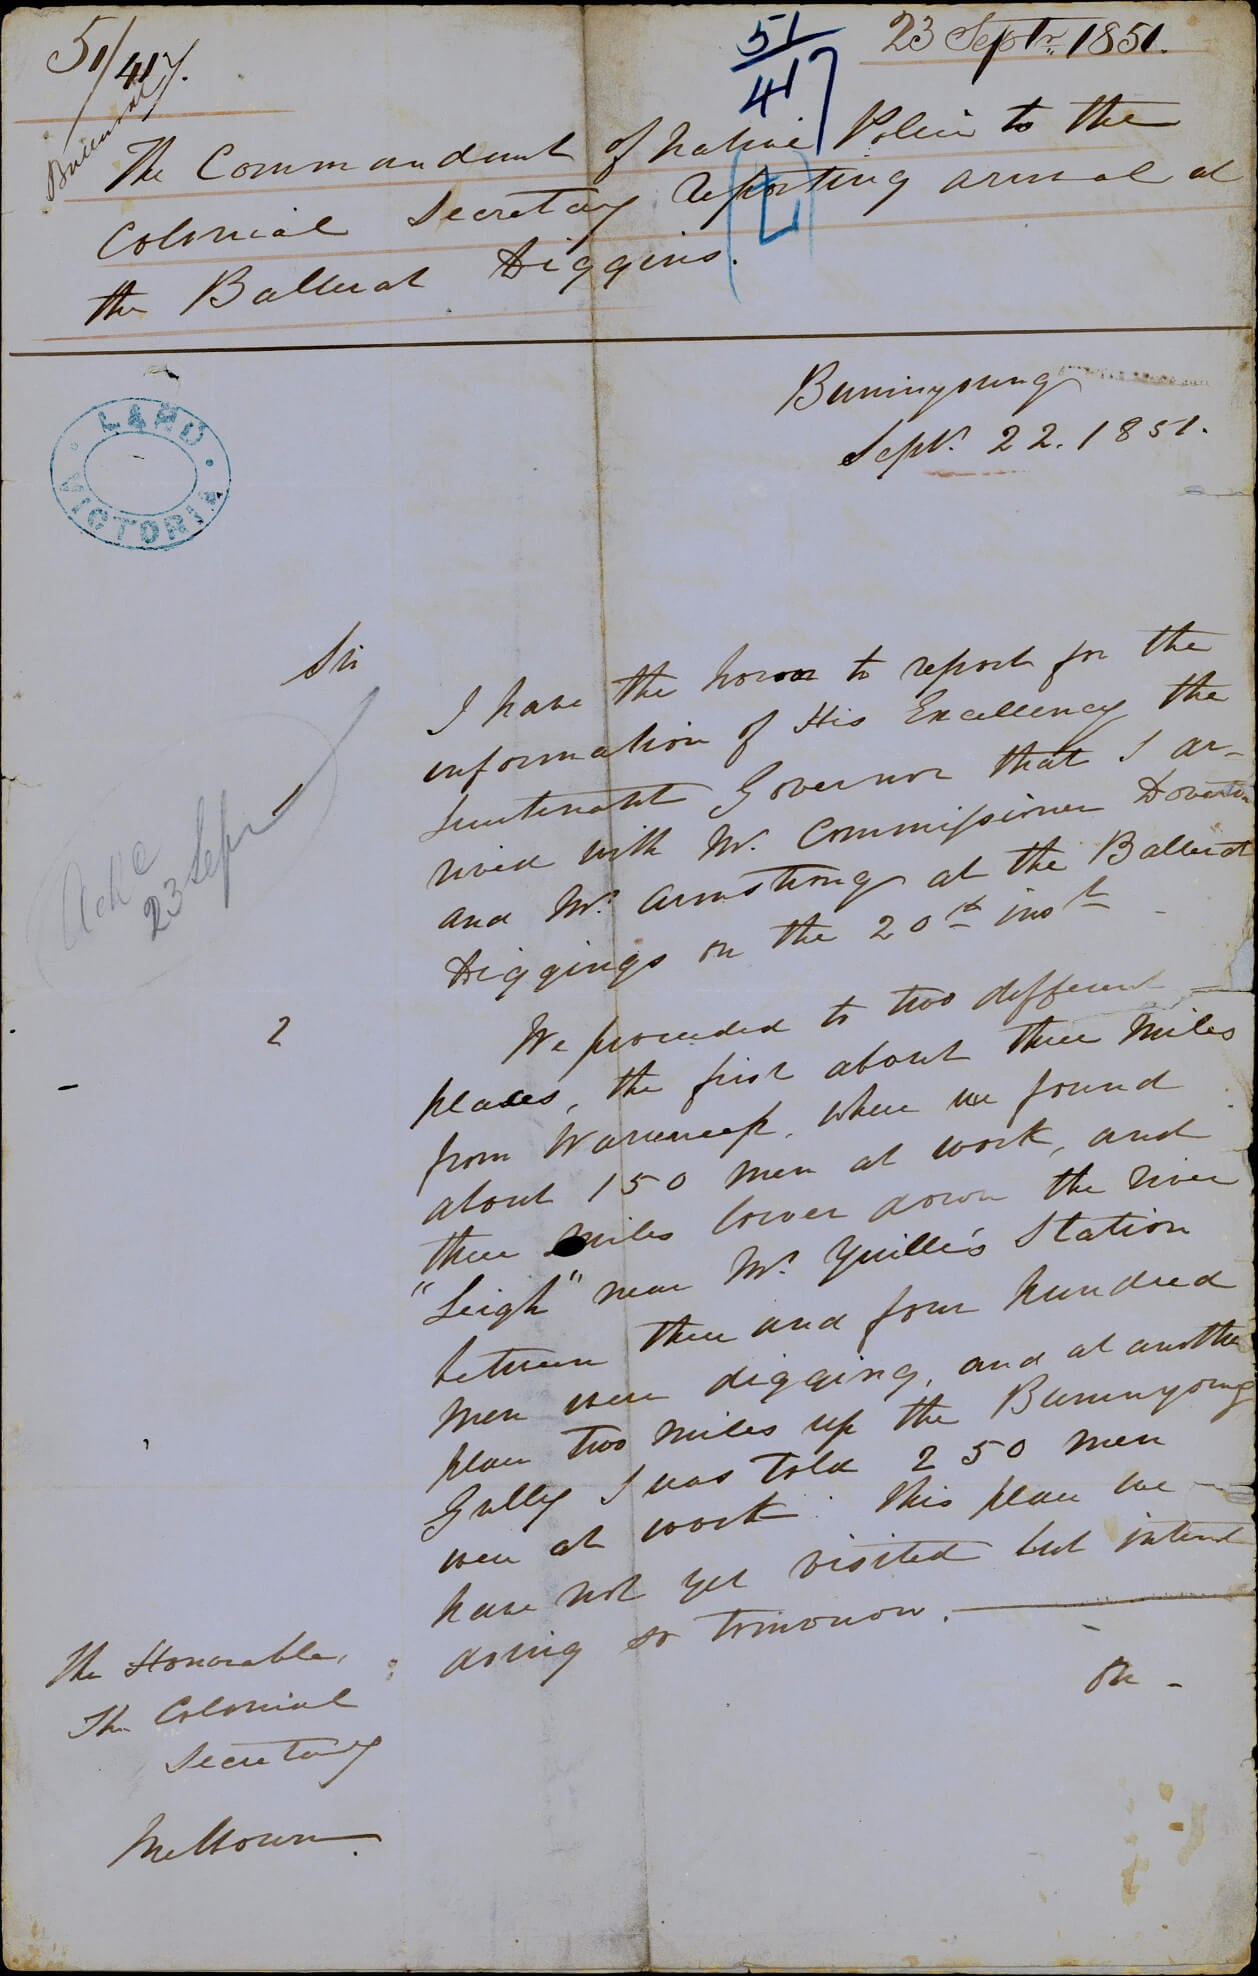 letter from 1851 written in cursive,